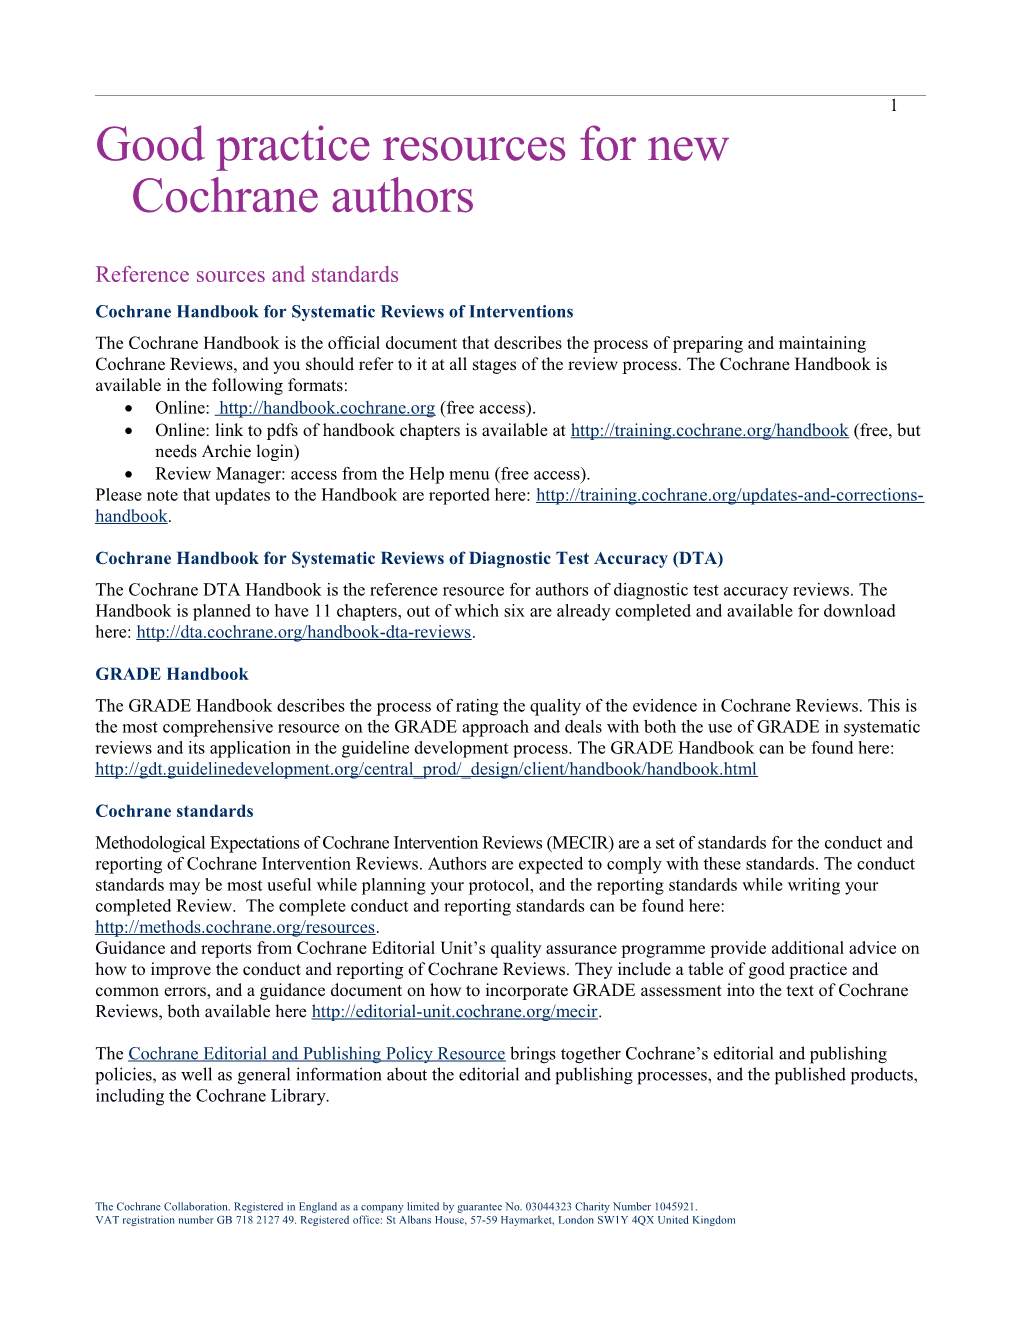 Good Practiceresources for New Cochrane Authors